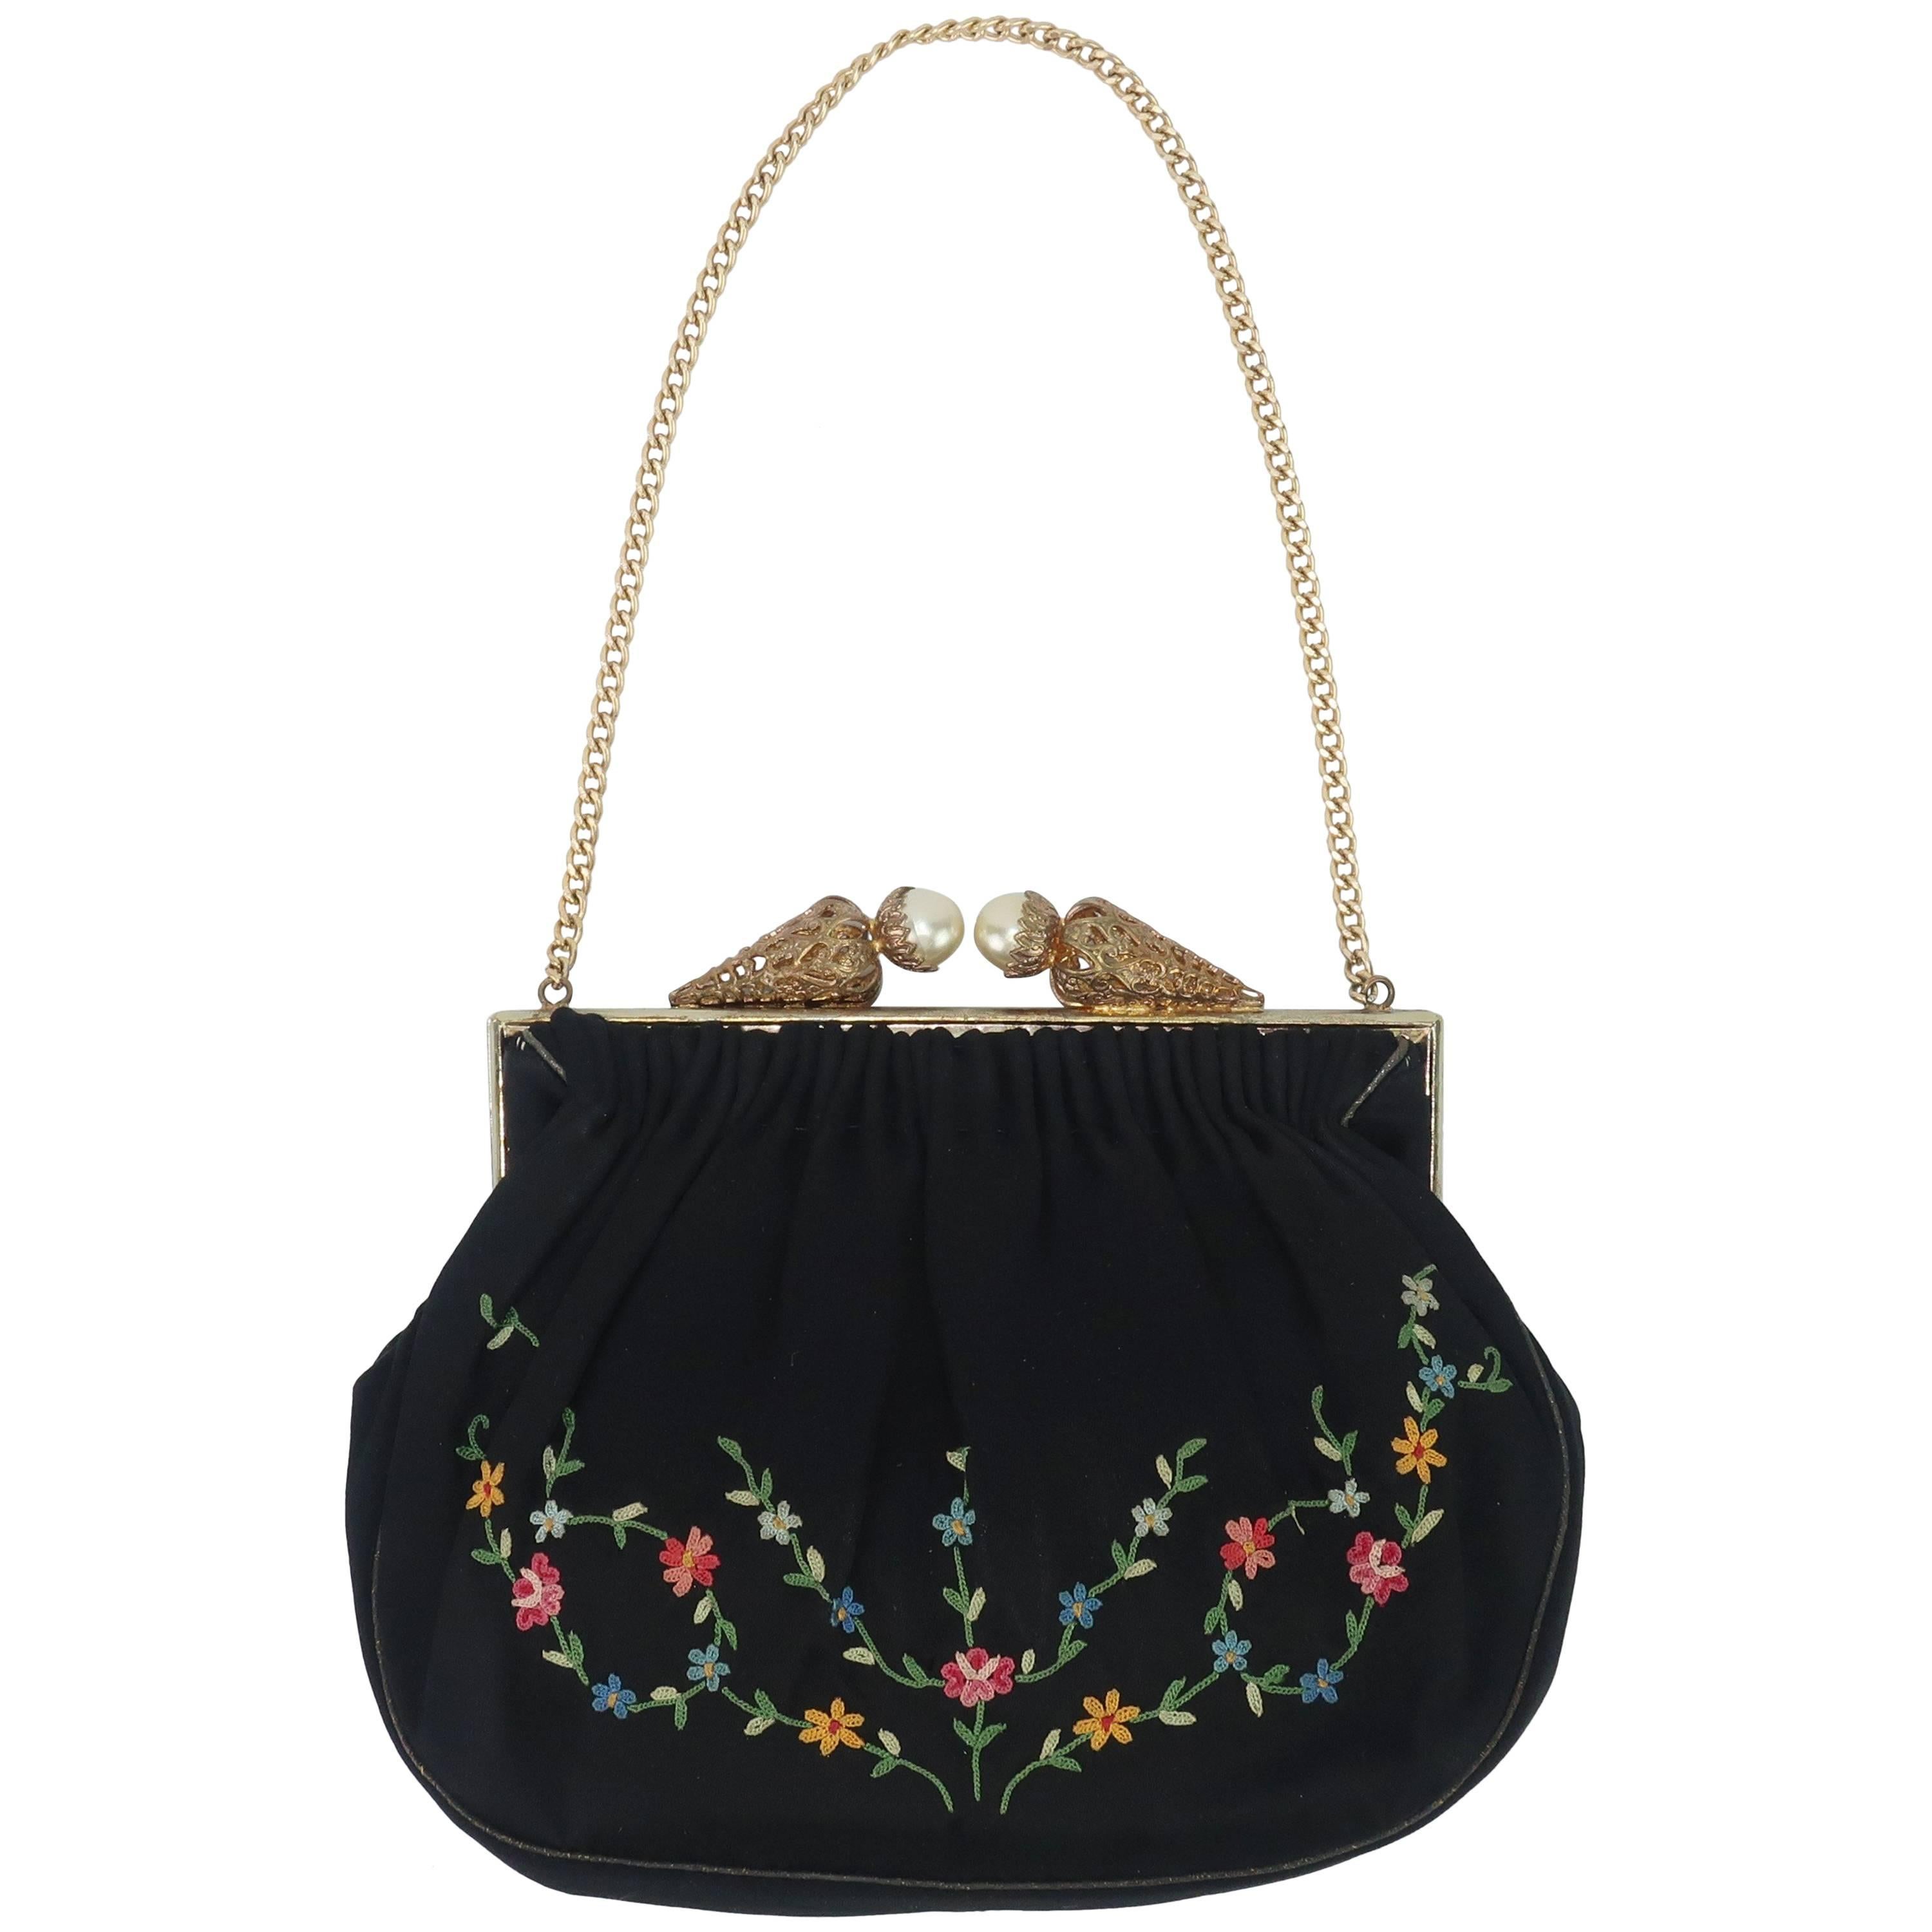 French 1950’s Black Satin Embroidered Evening Handbag